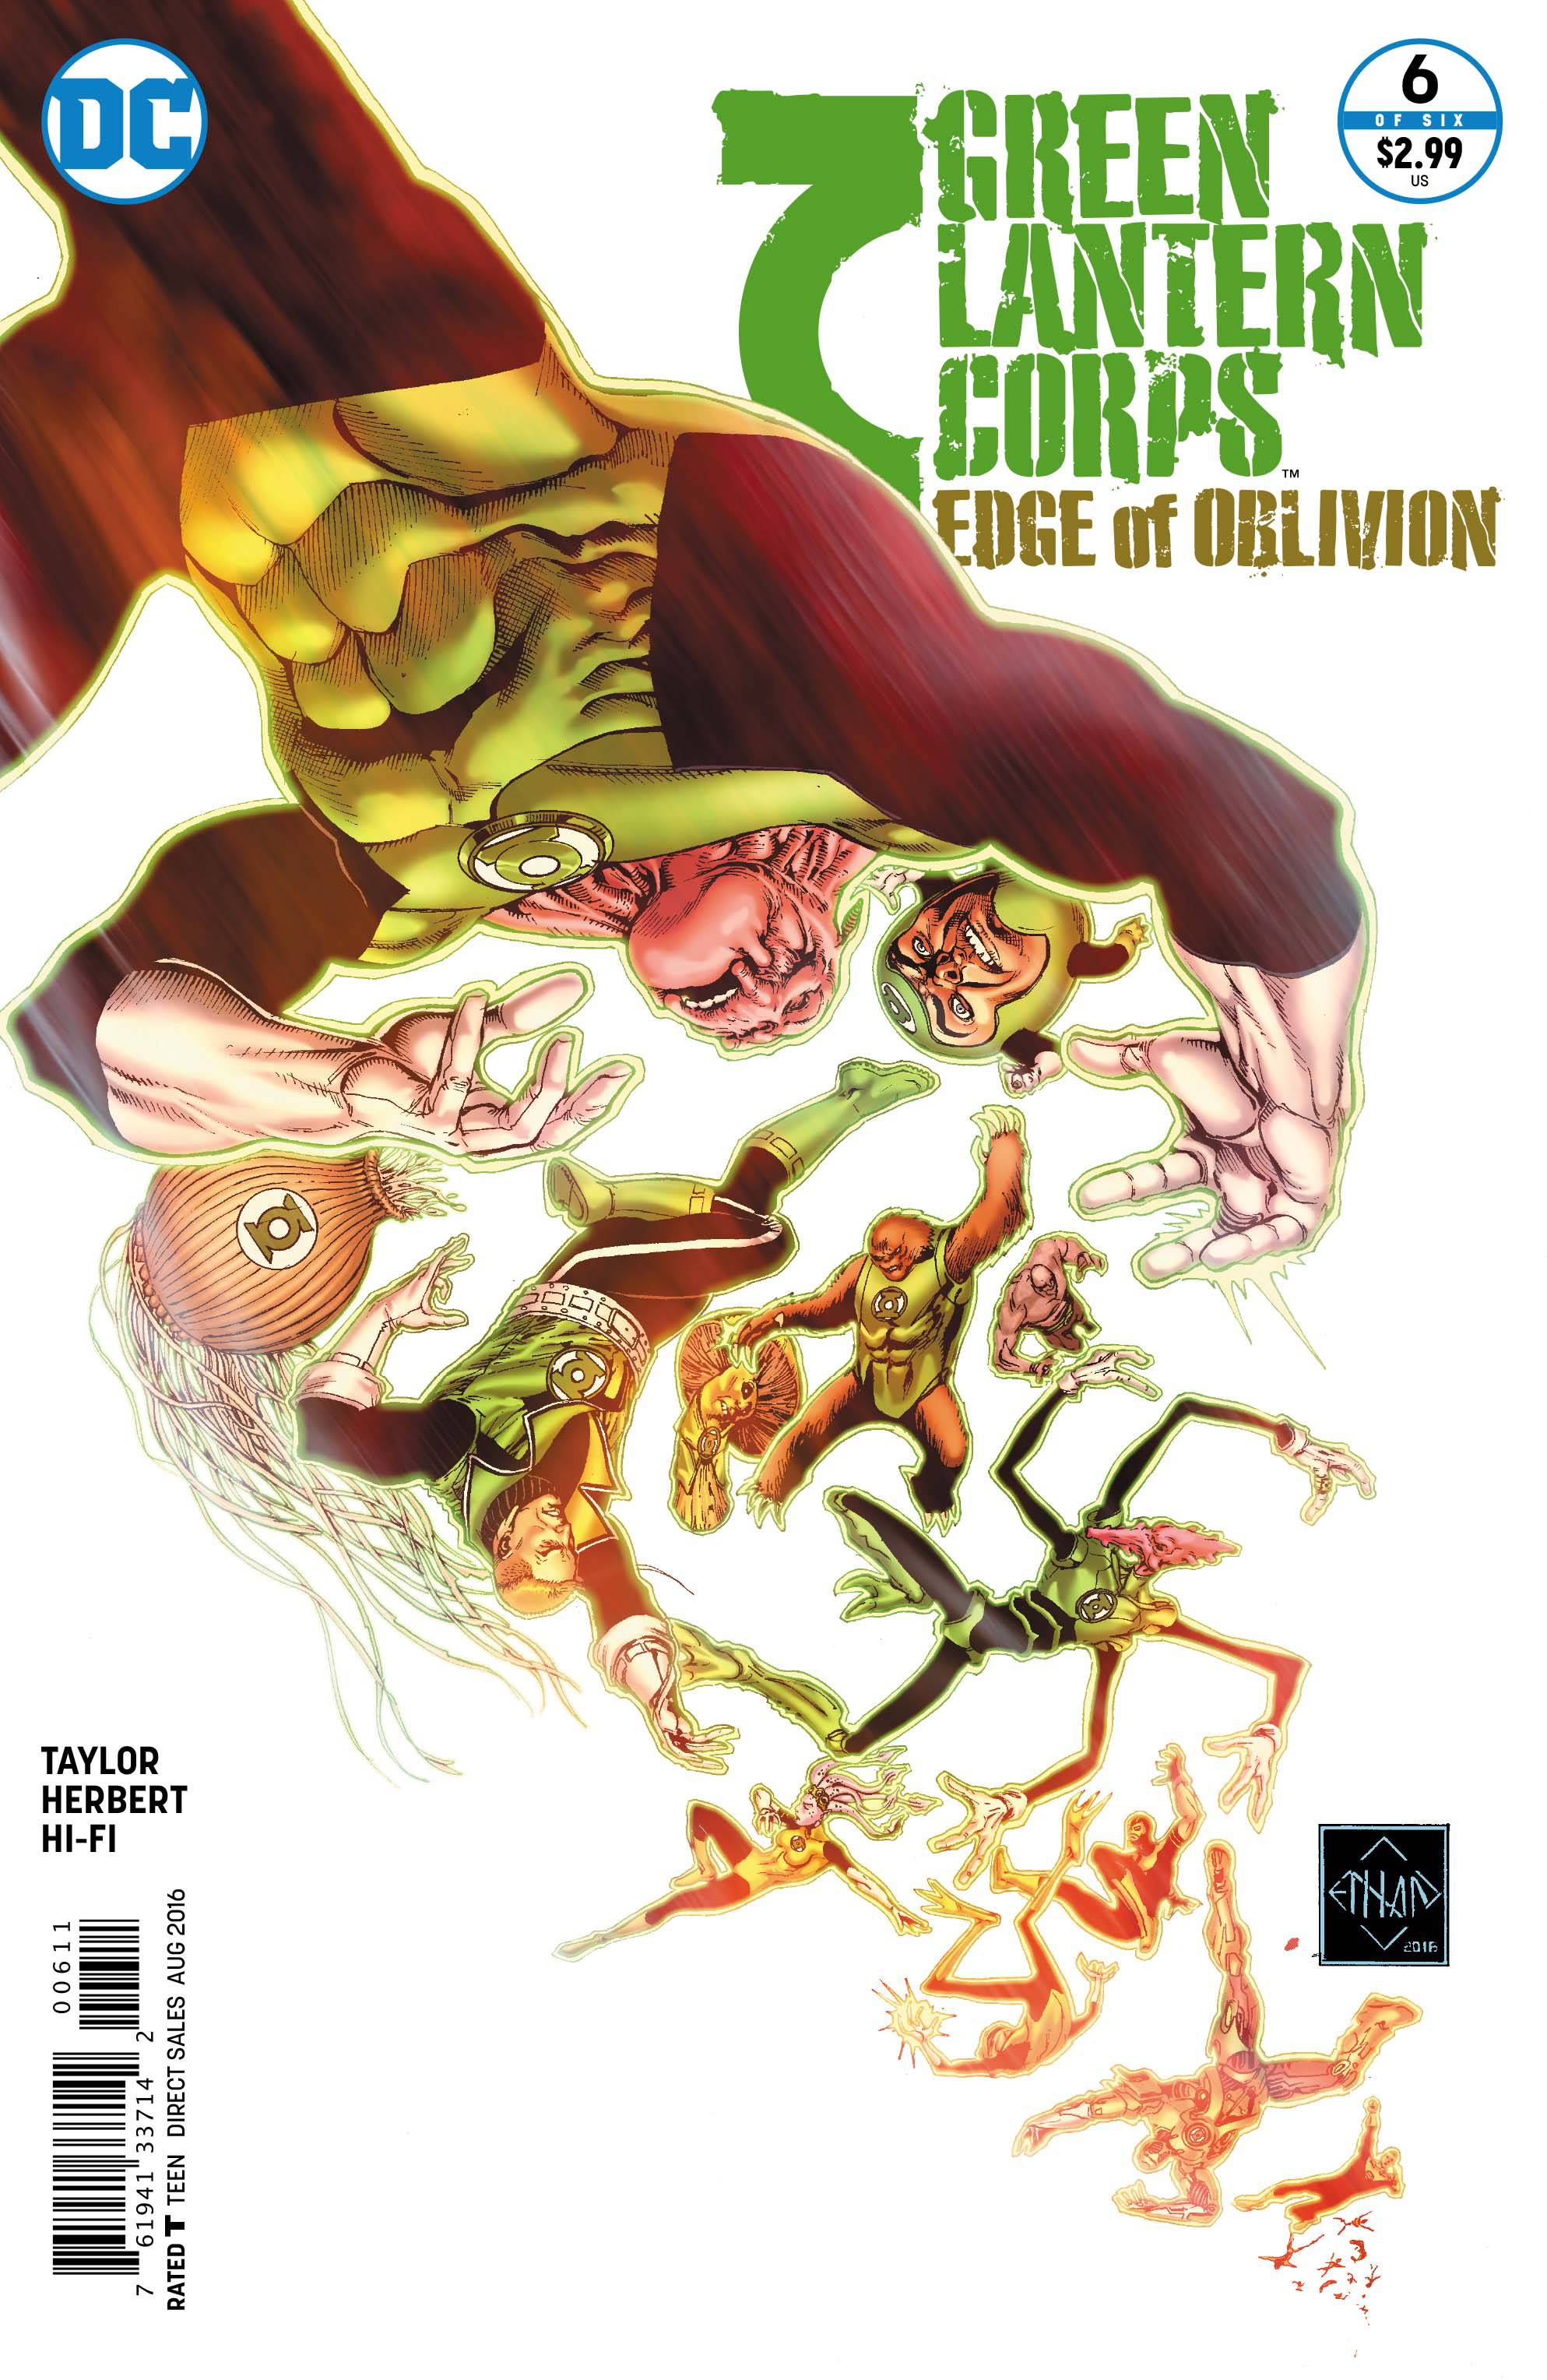 Green Lantern Corps Edge of Oblivion #6